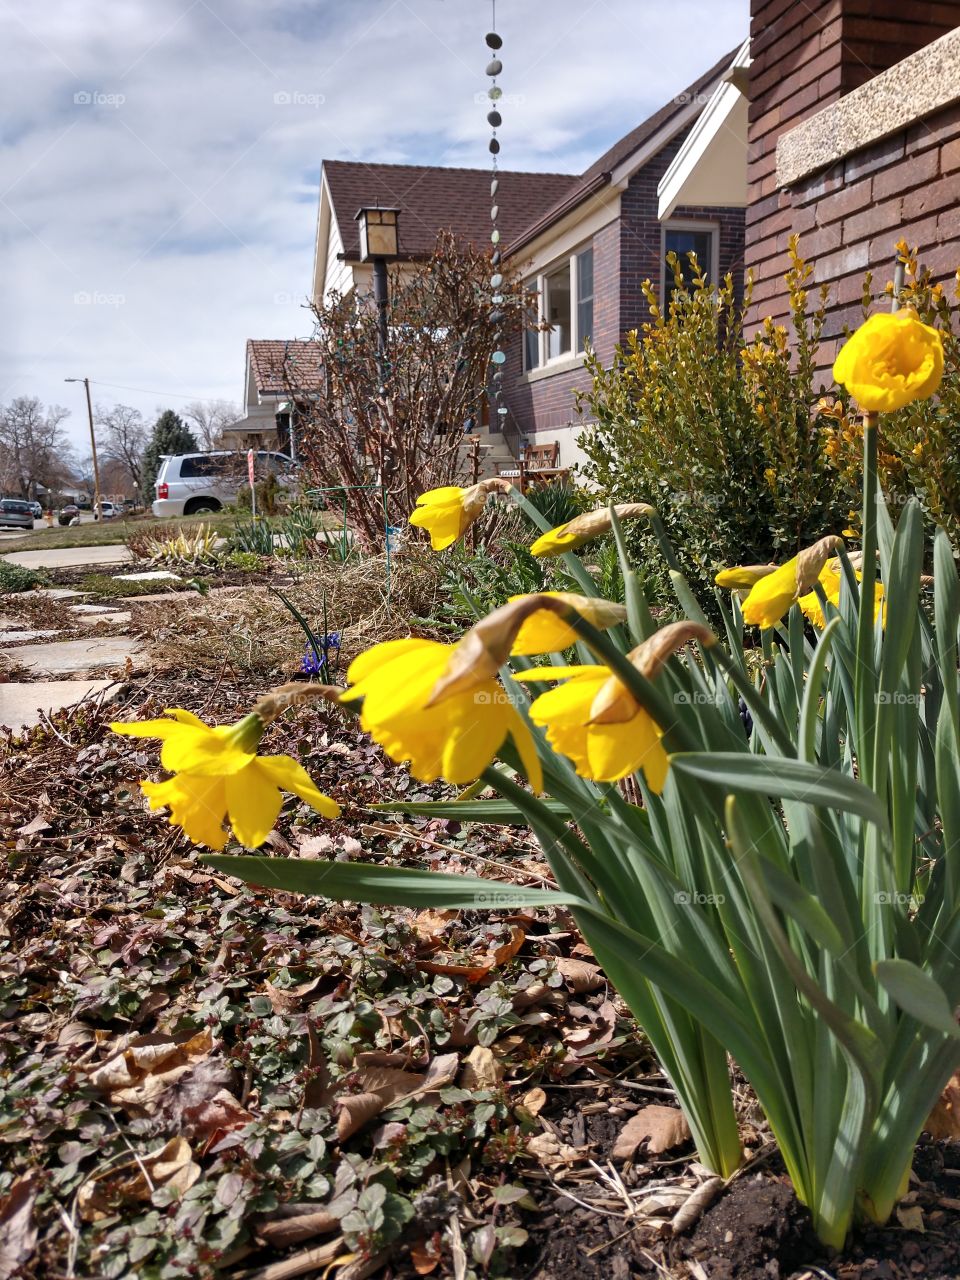 daffodils in bloom